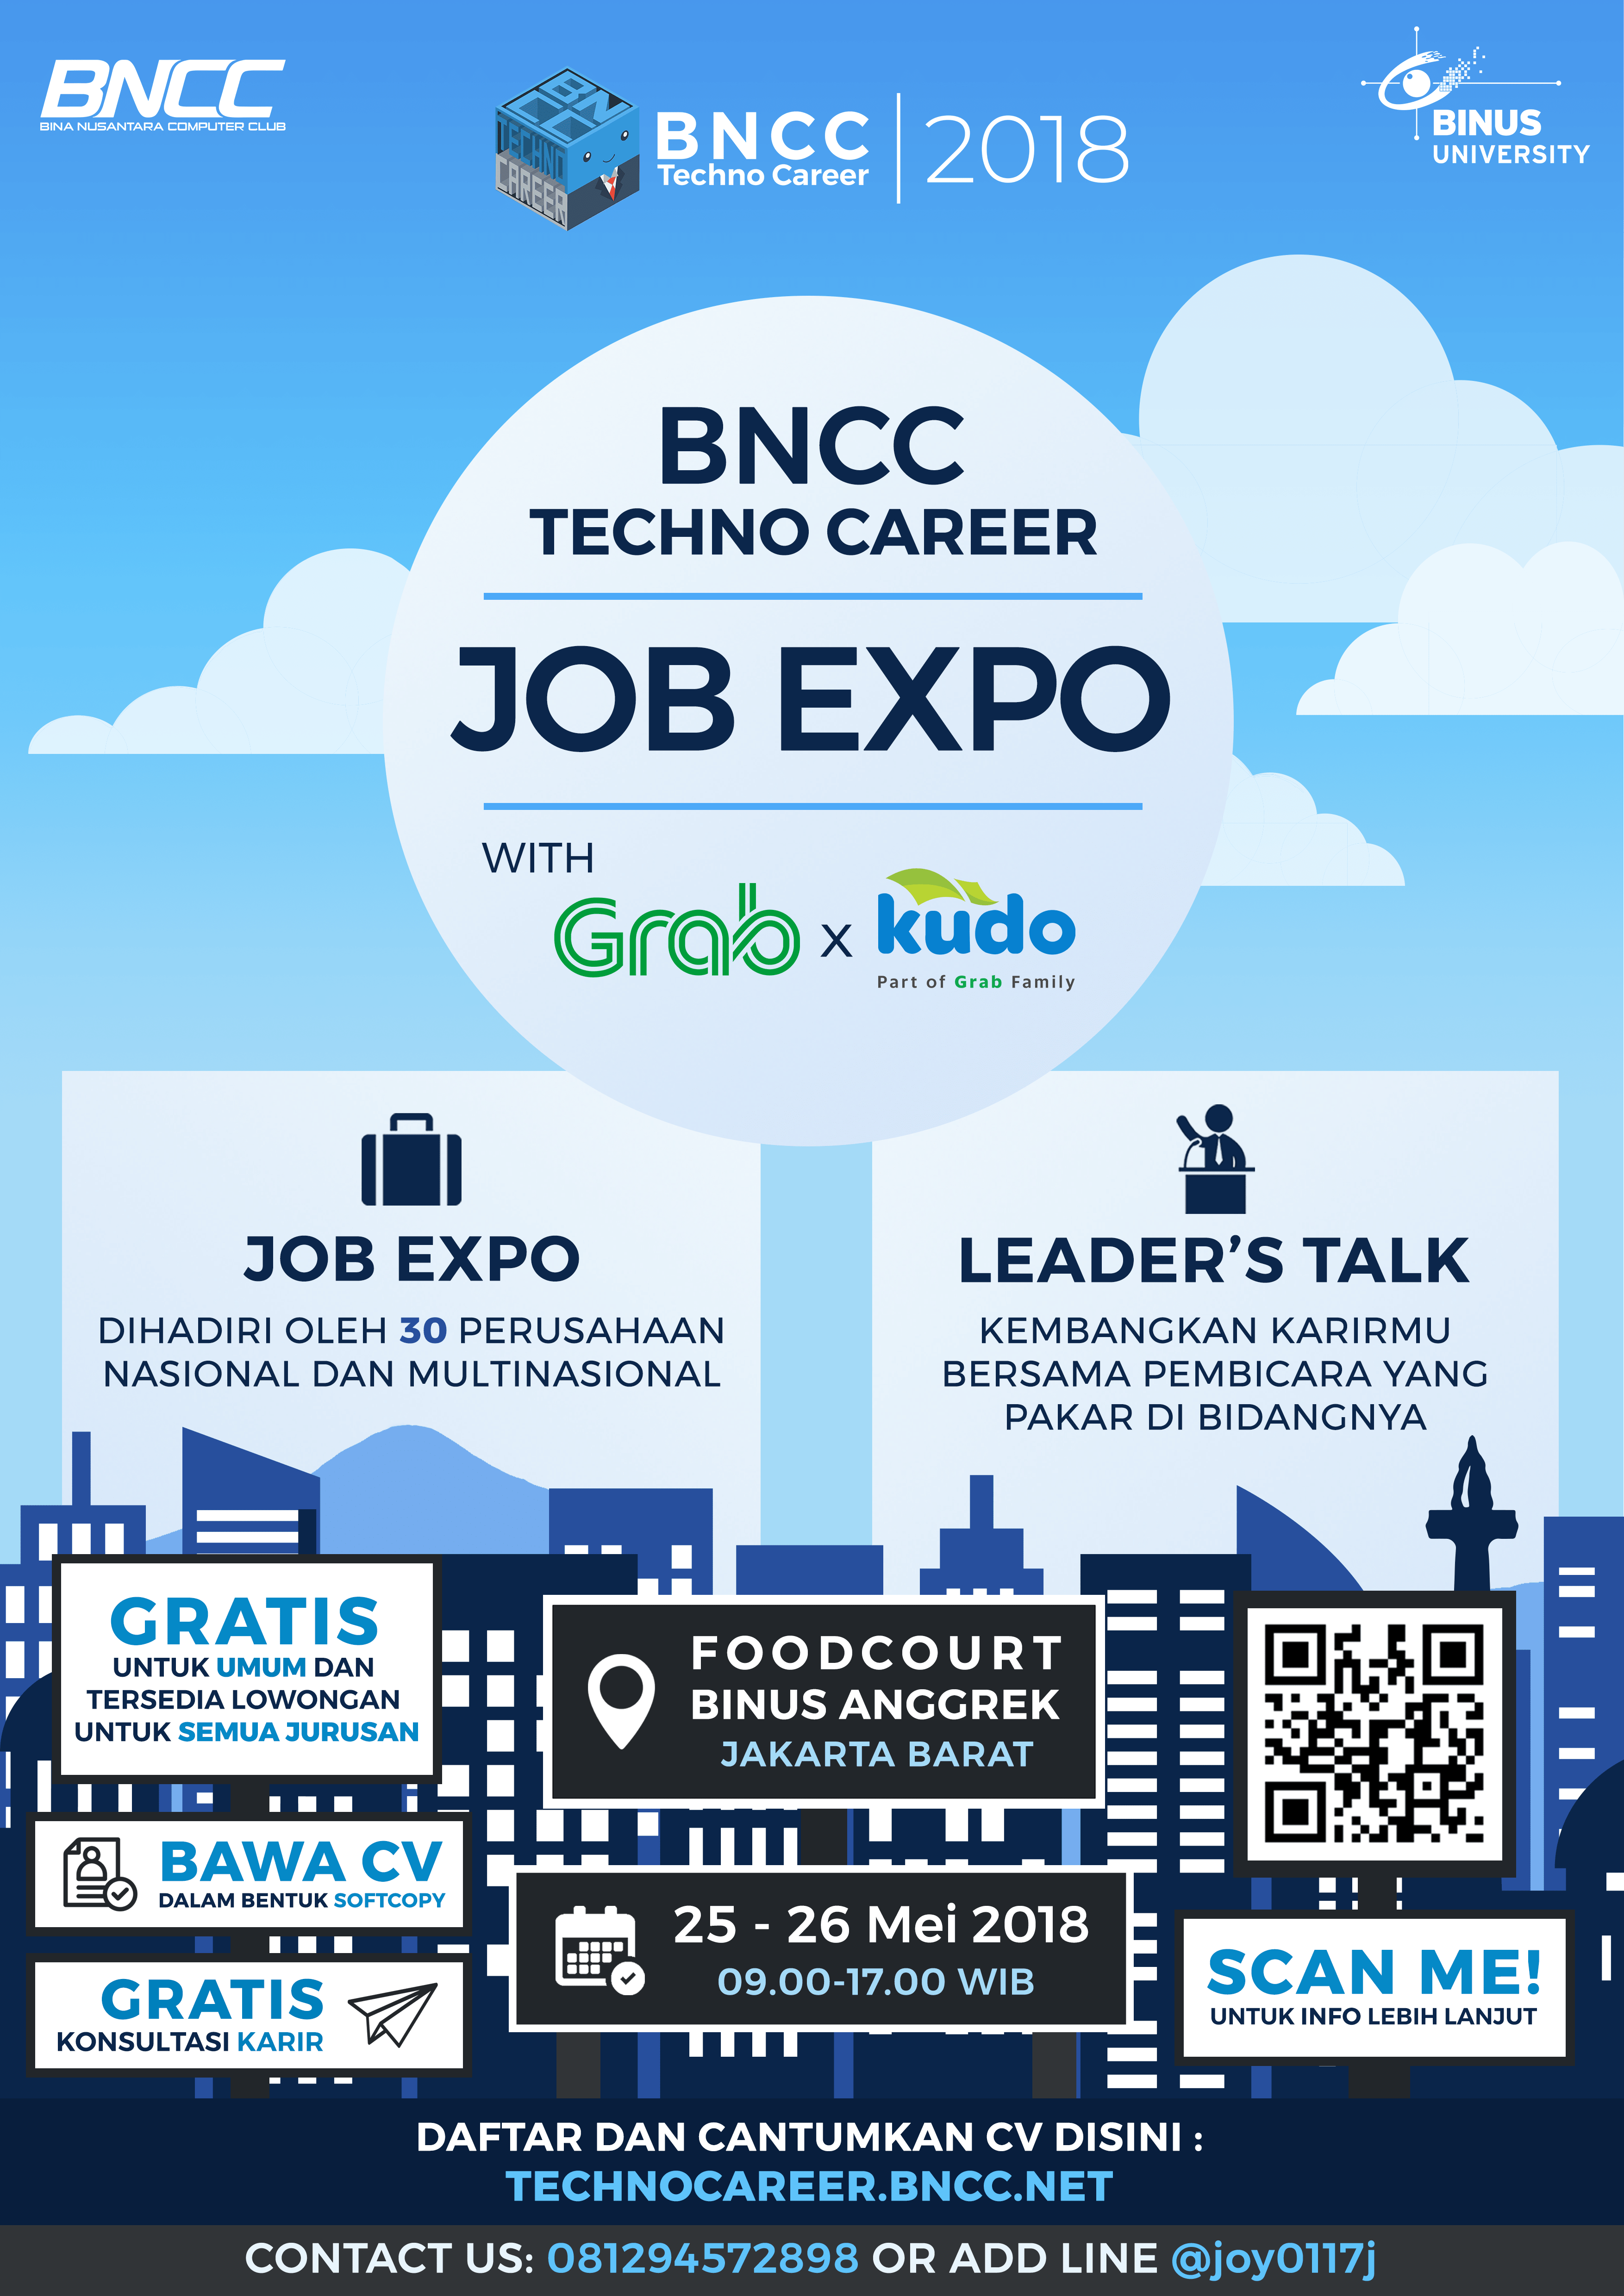 BNCC Techno Career 2018 with Grab x Kudo